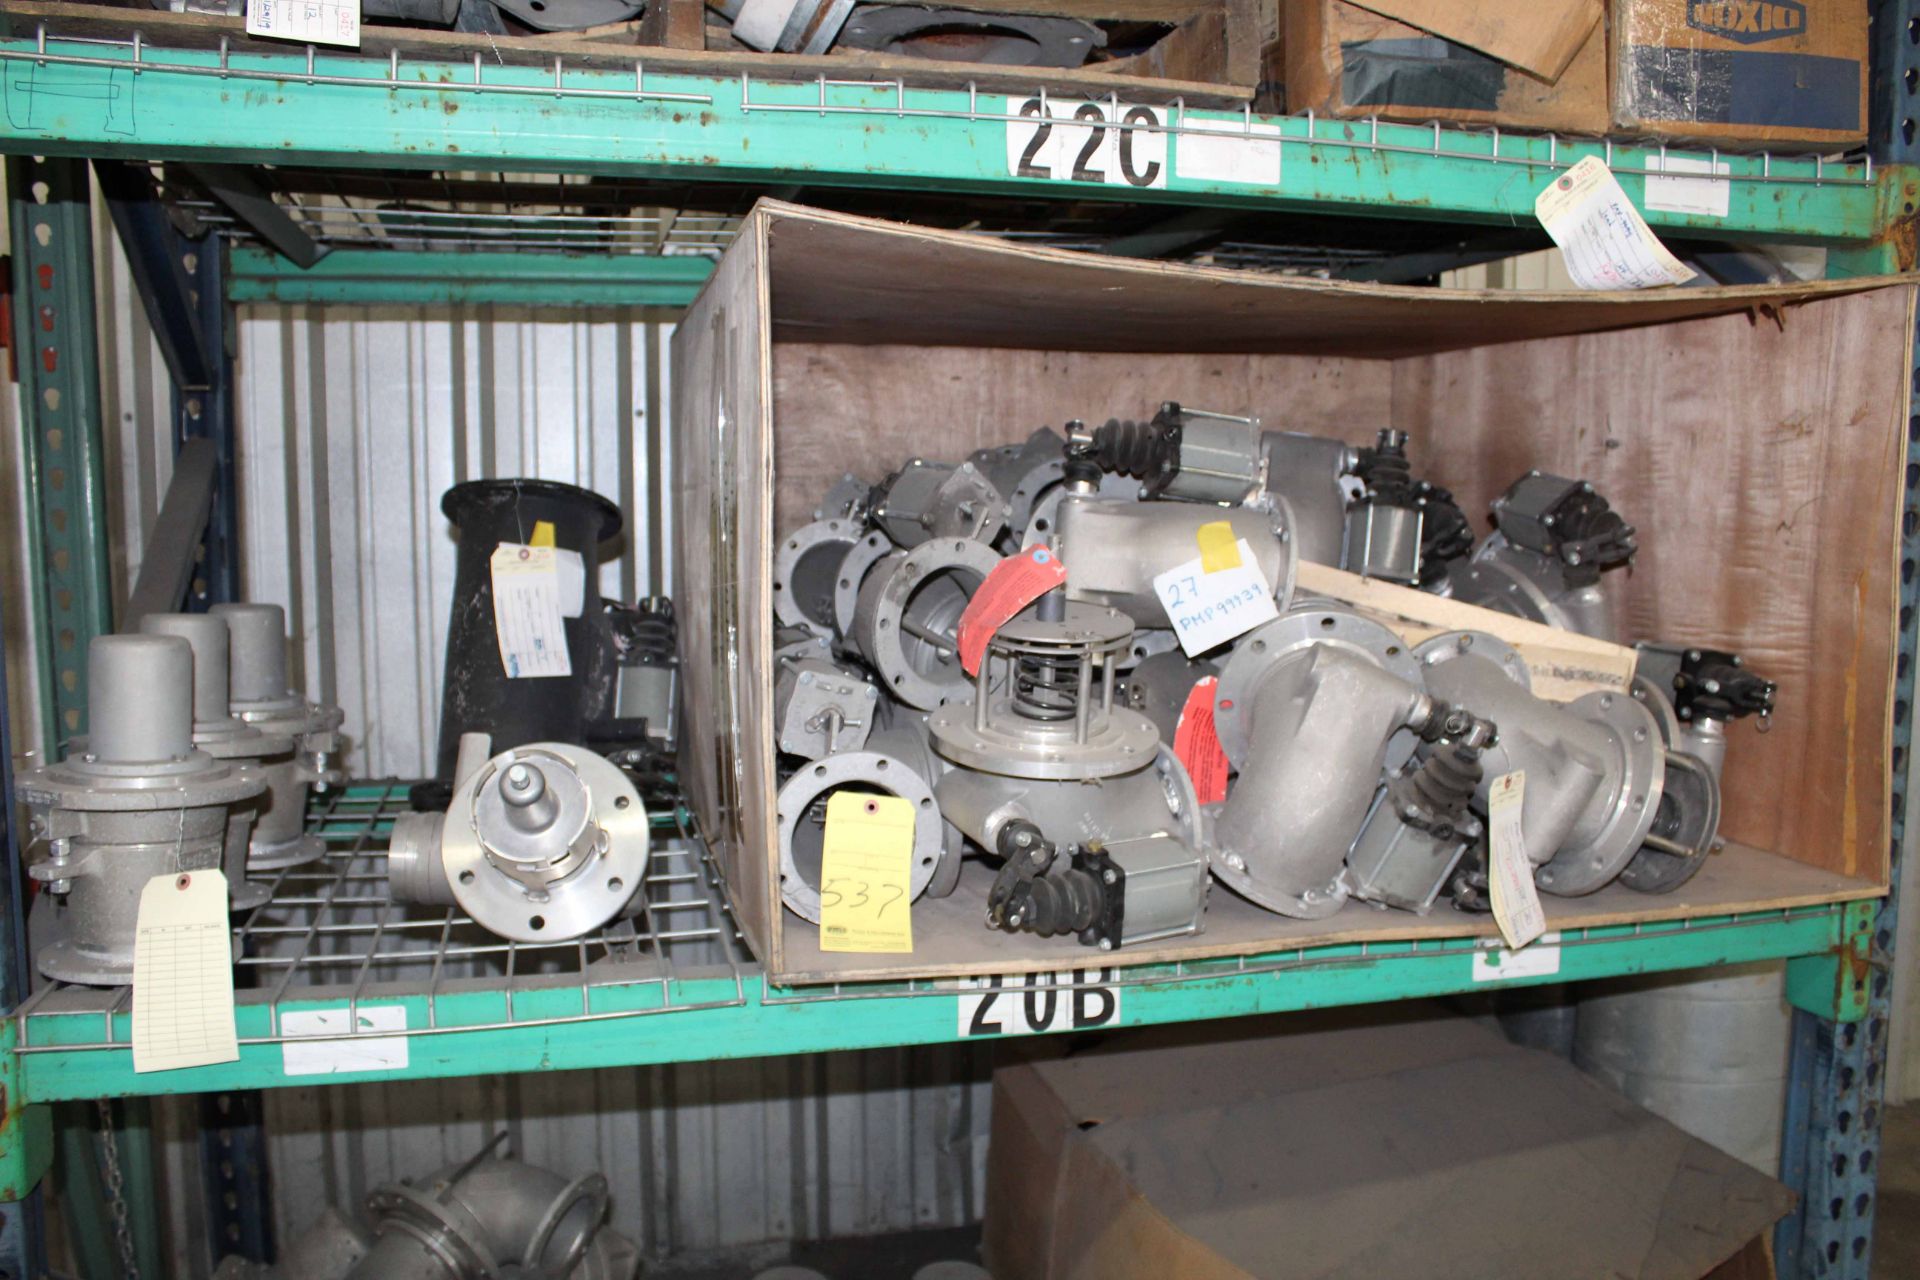 LOT CONSISTING OF: aluminum trailer parts & pumps (on one shelf)